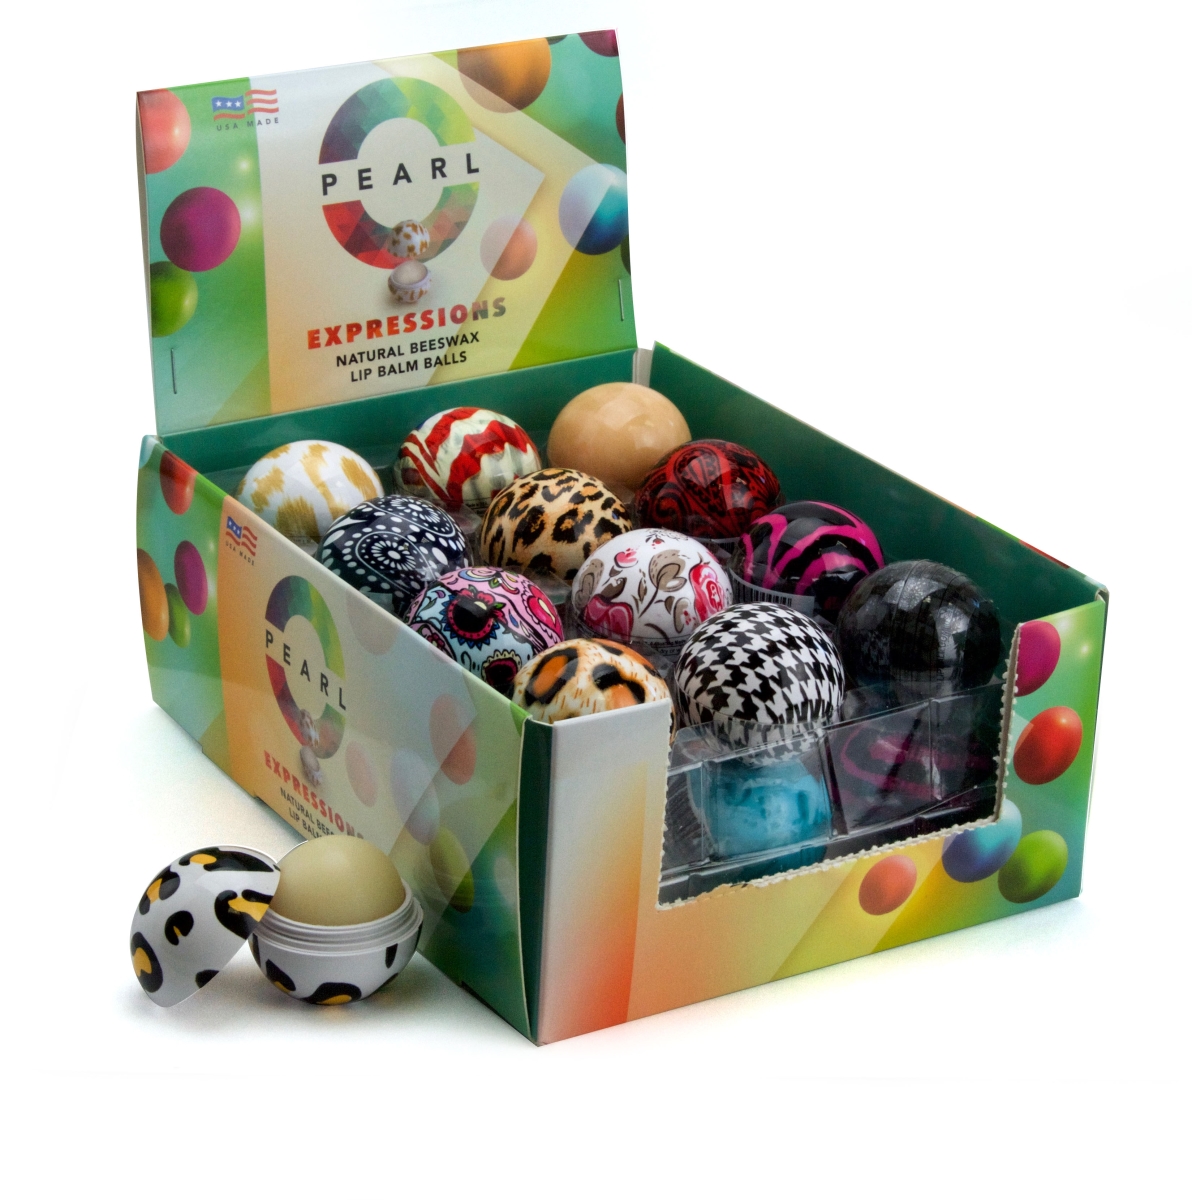 Expr 24dis Expressions Lip Balm Balls 24 Count Display Box